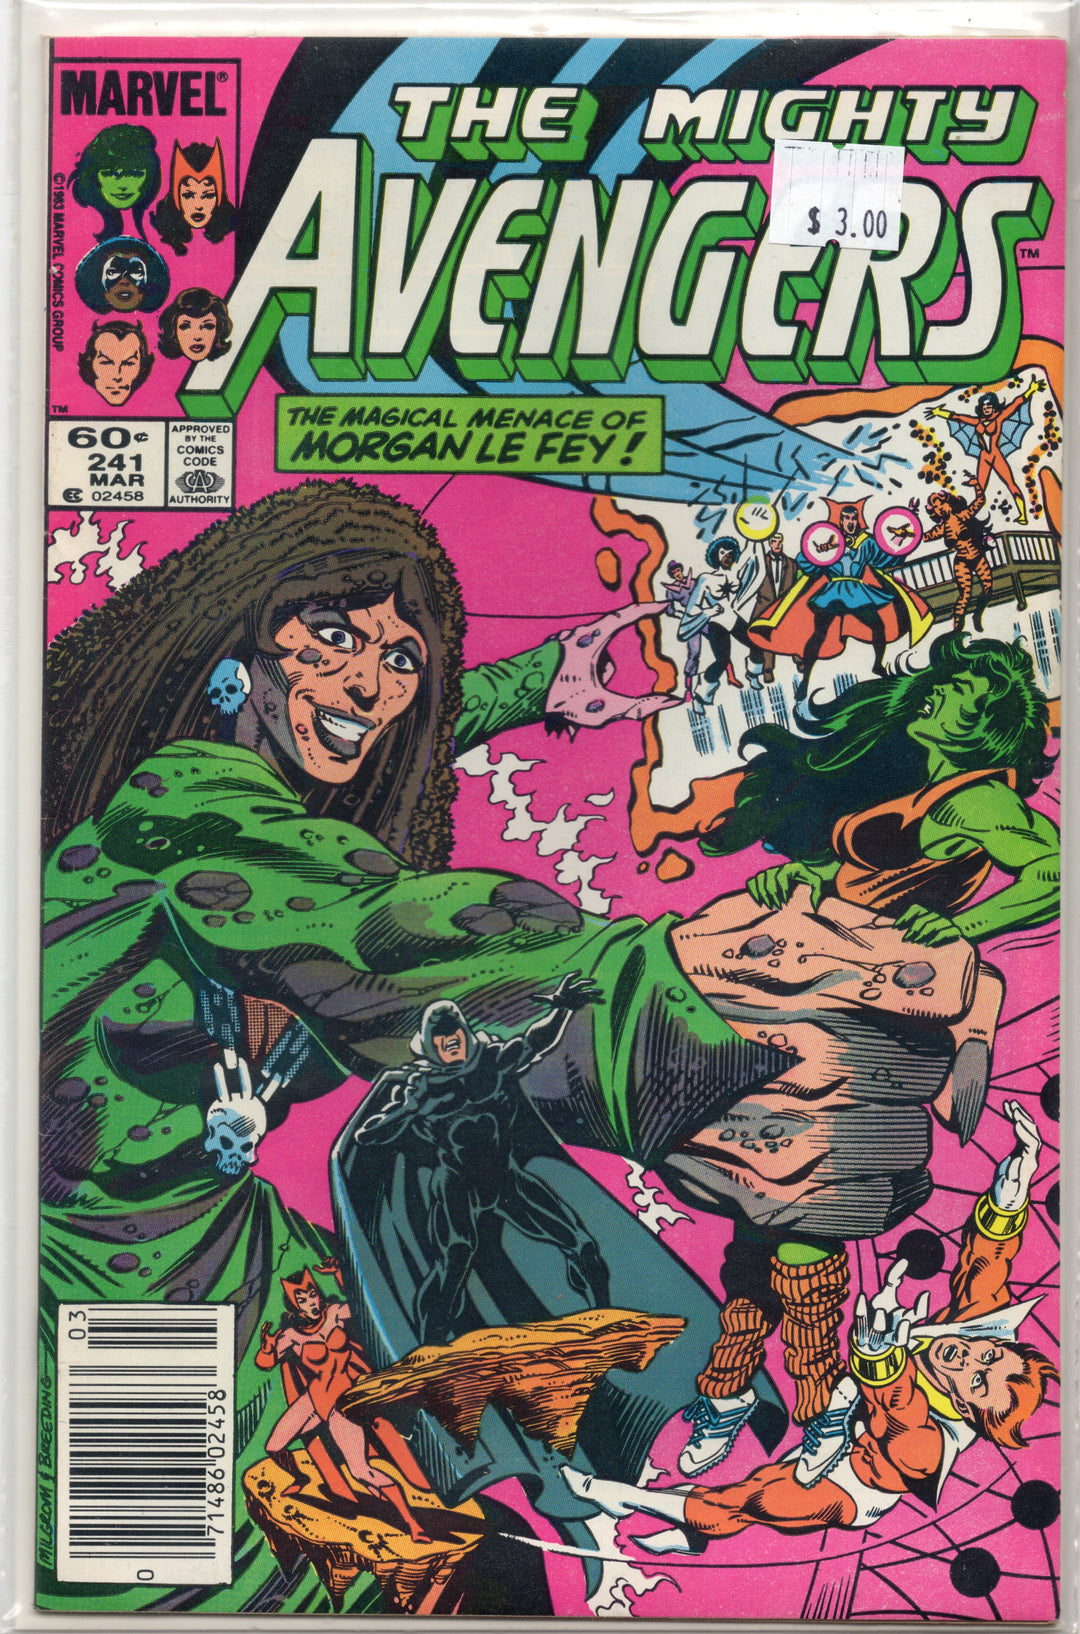 The Avengers #241